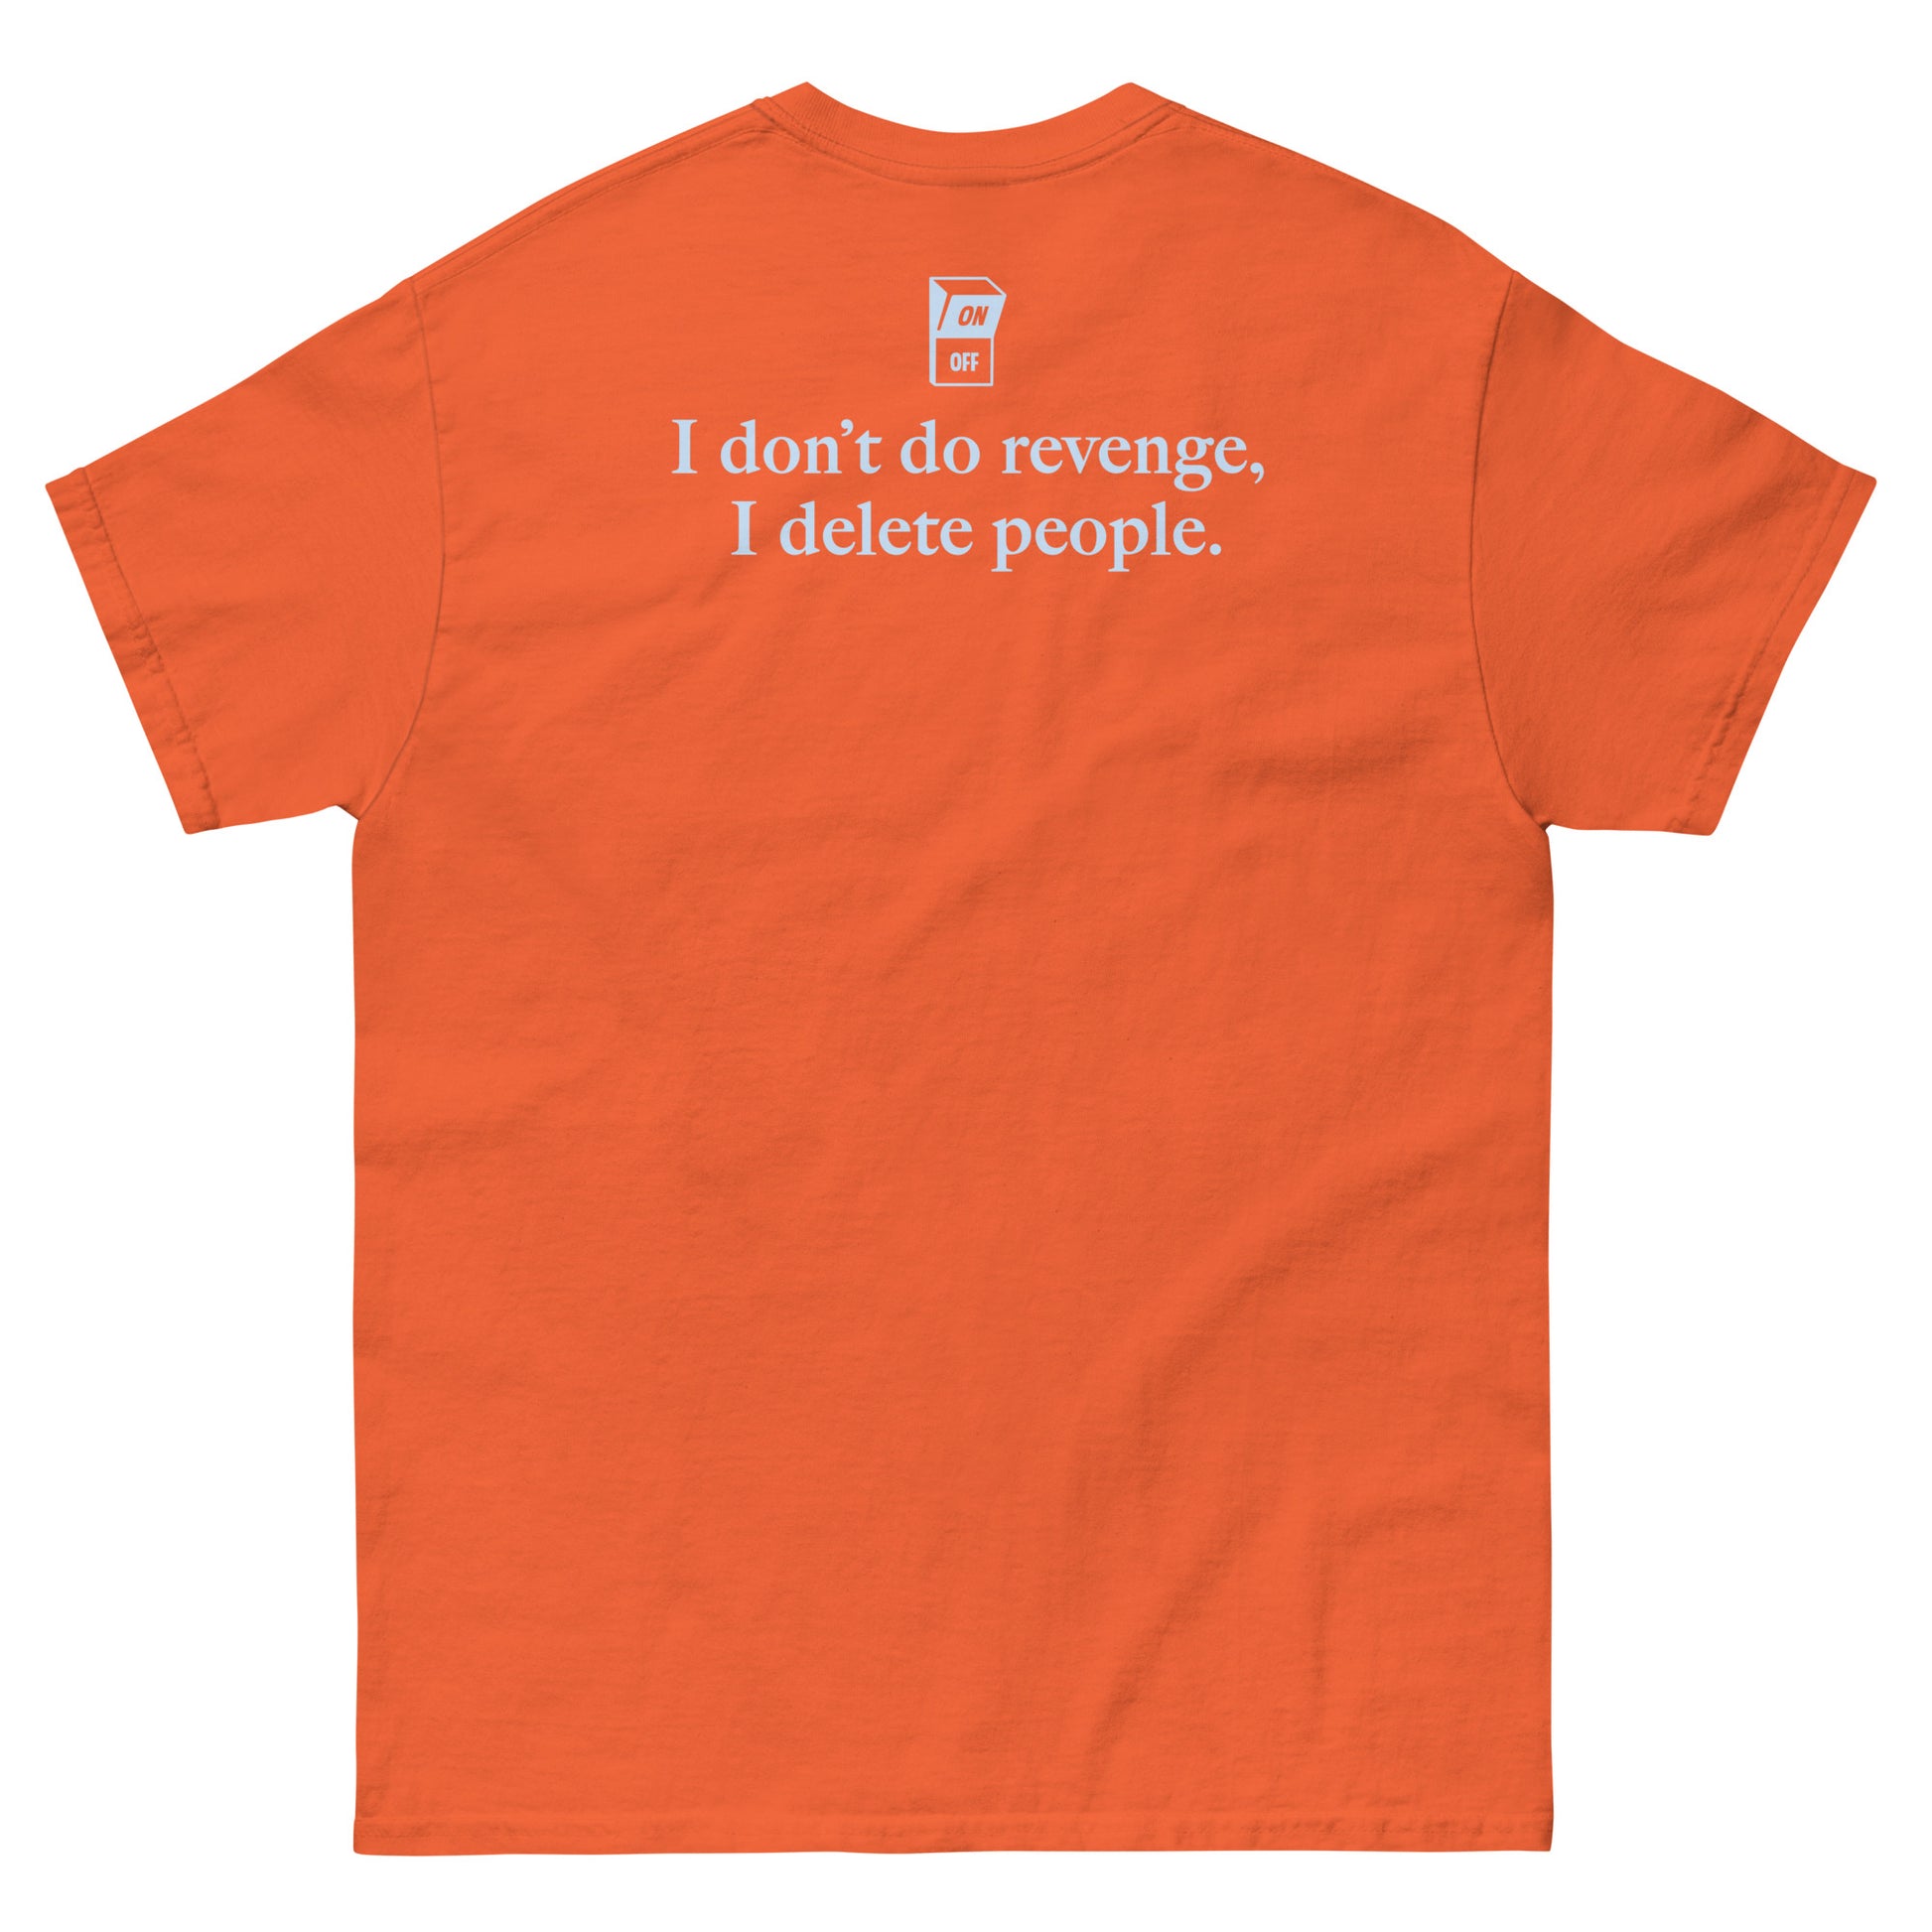 Orange High Quality Tee - Front Design with "I don't do revenge, I delete people. " print on left chest - Back Design with a Phrase "I don't do revenge, I delete people." print